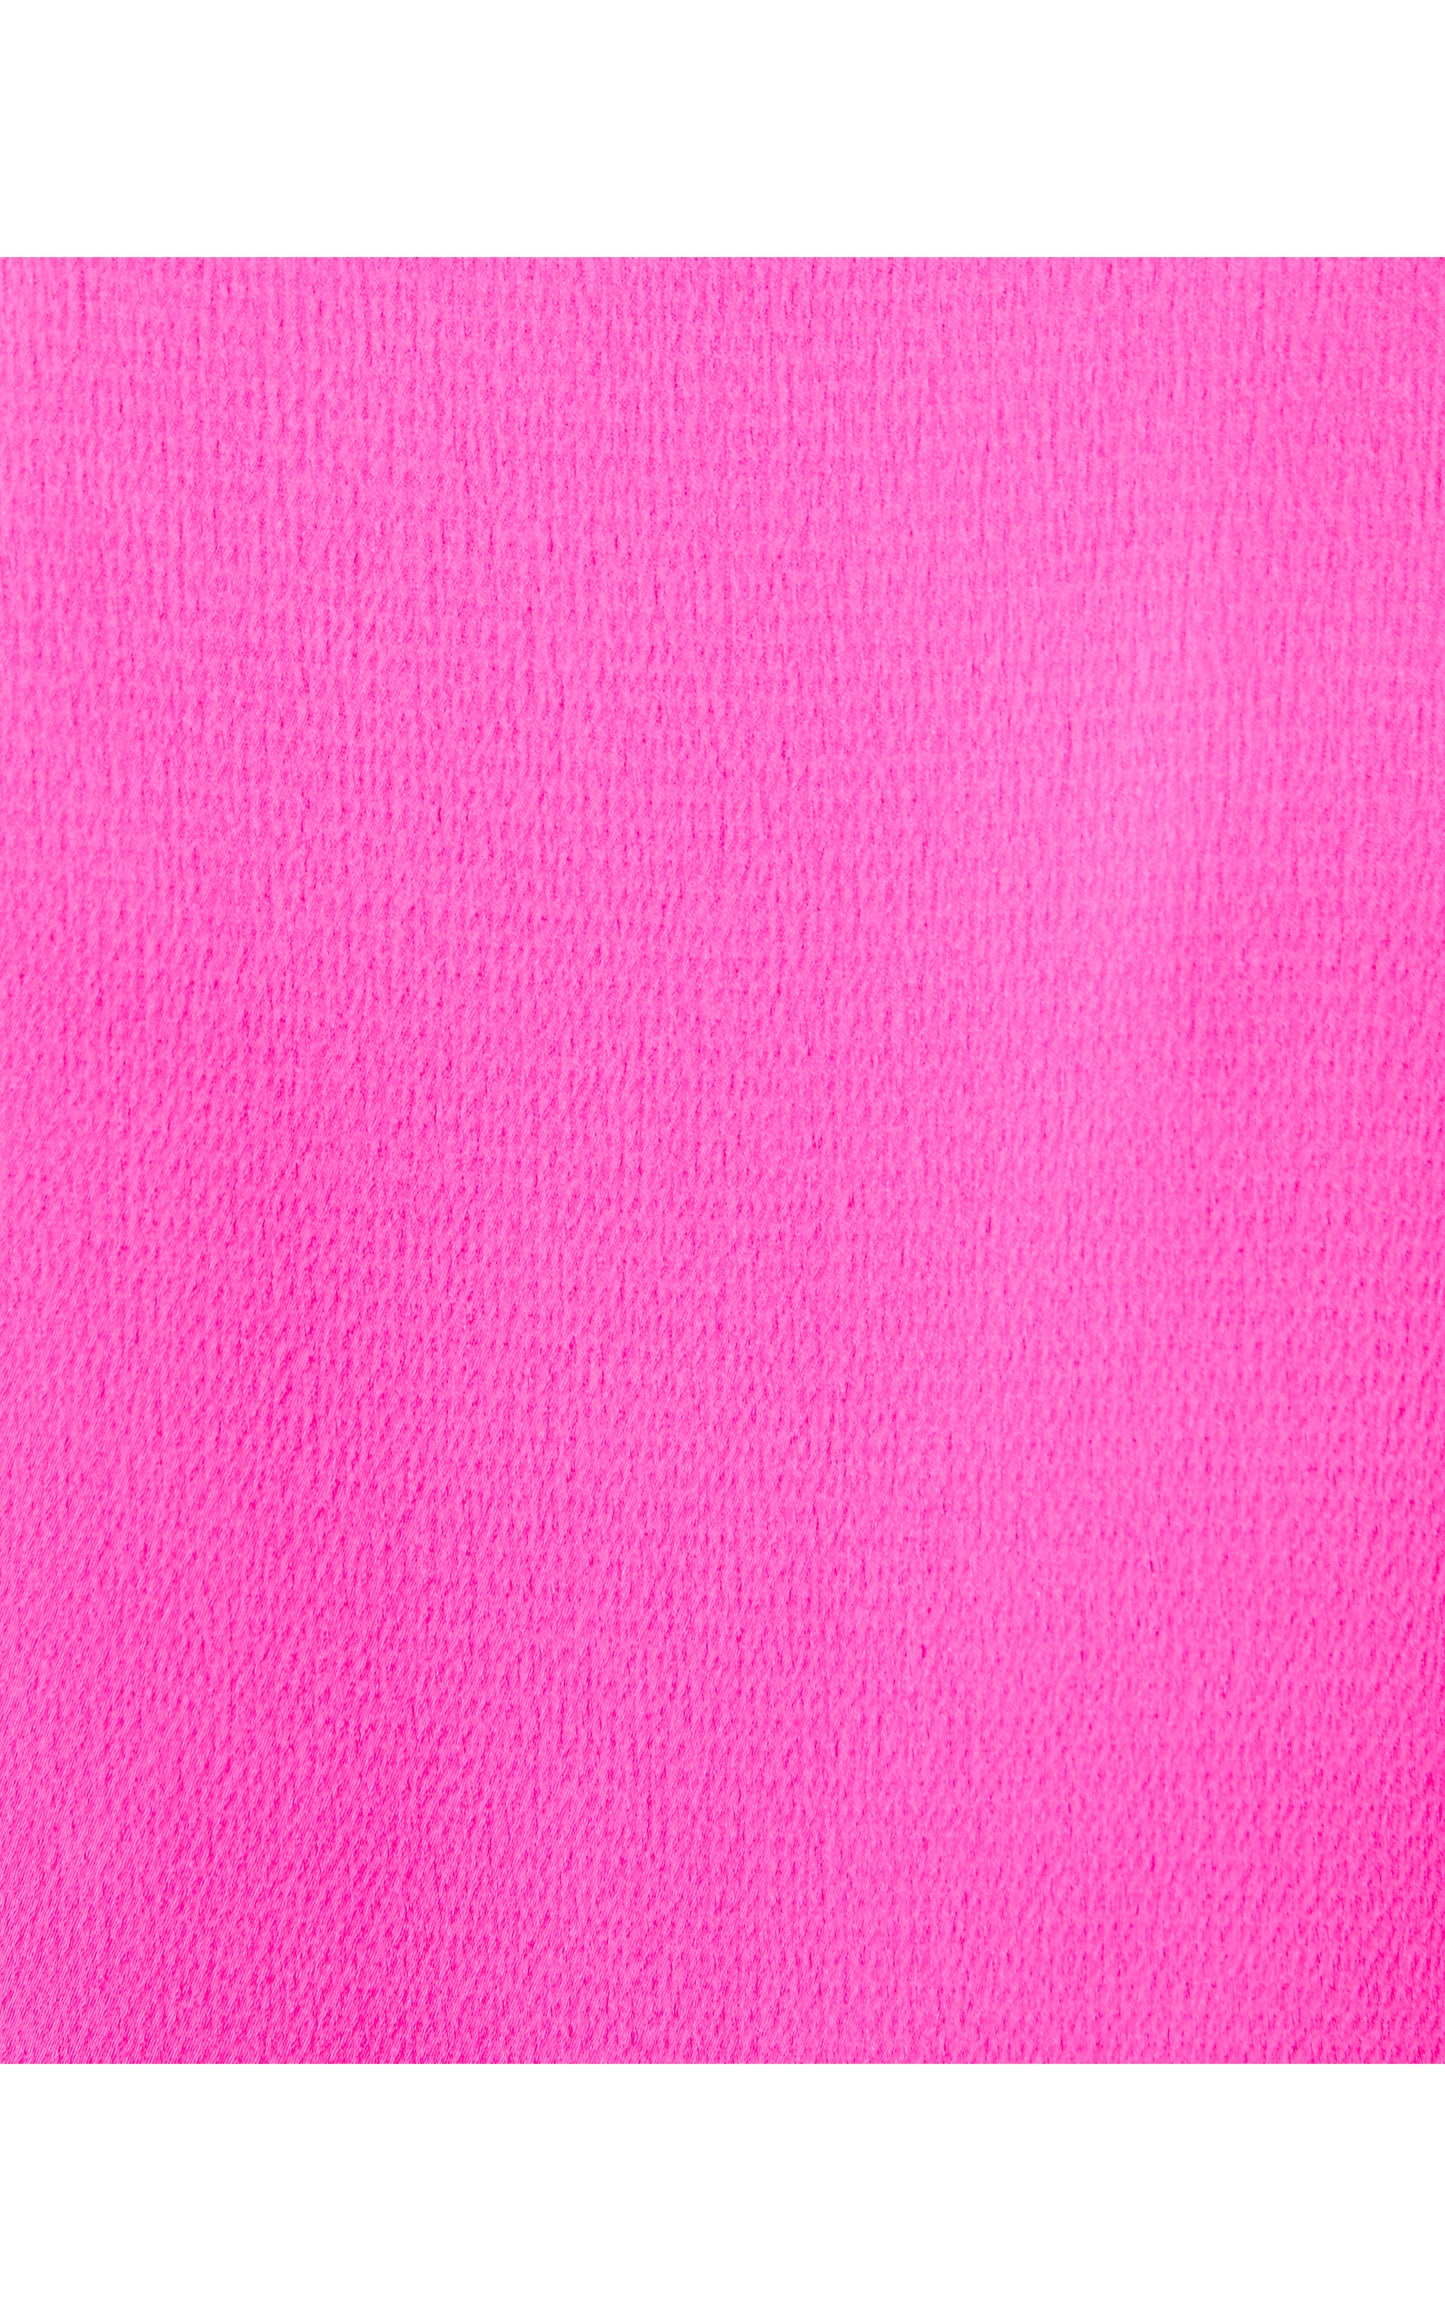 Jaylene Long Sleeve Top in Cerise Pink